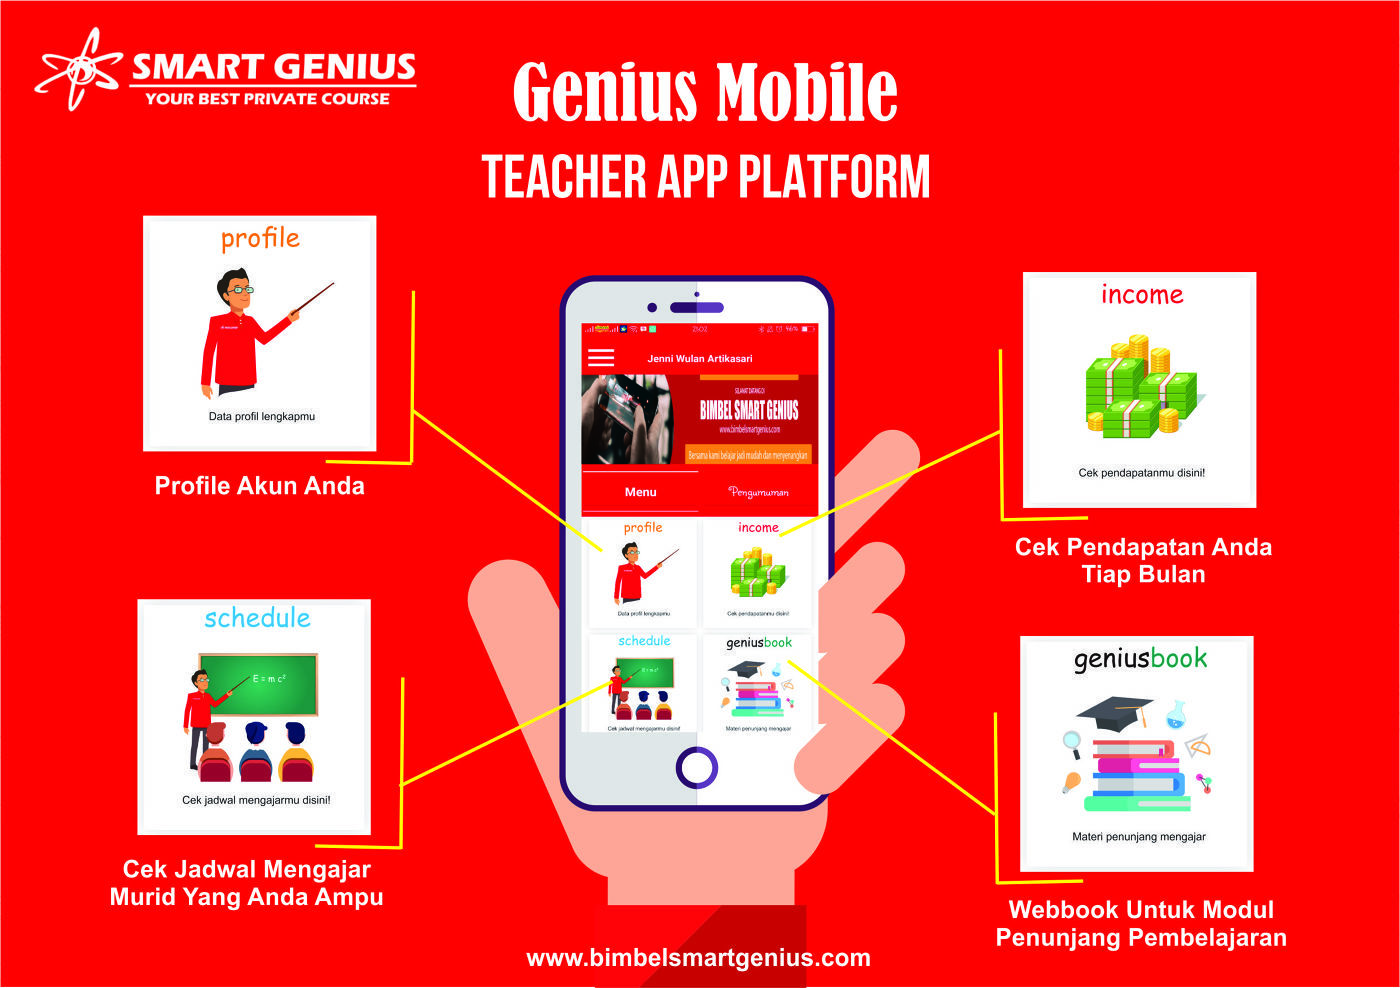 GeniusMobile - Teacher App Bimbel Smart Genius